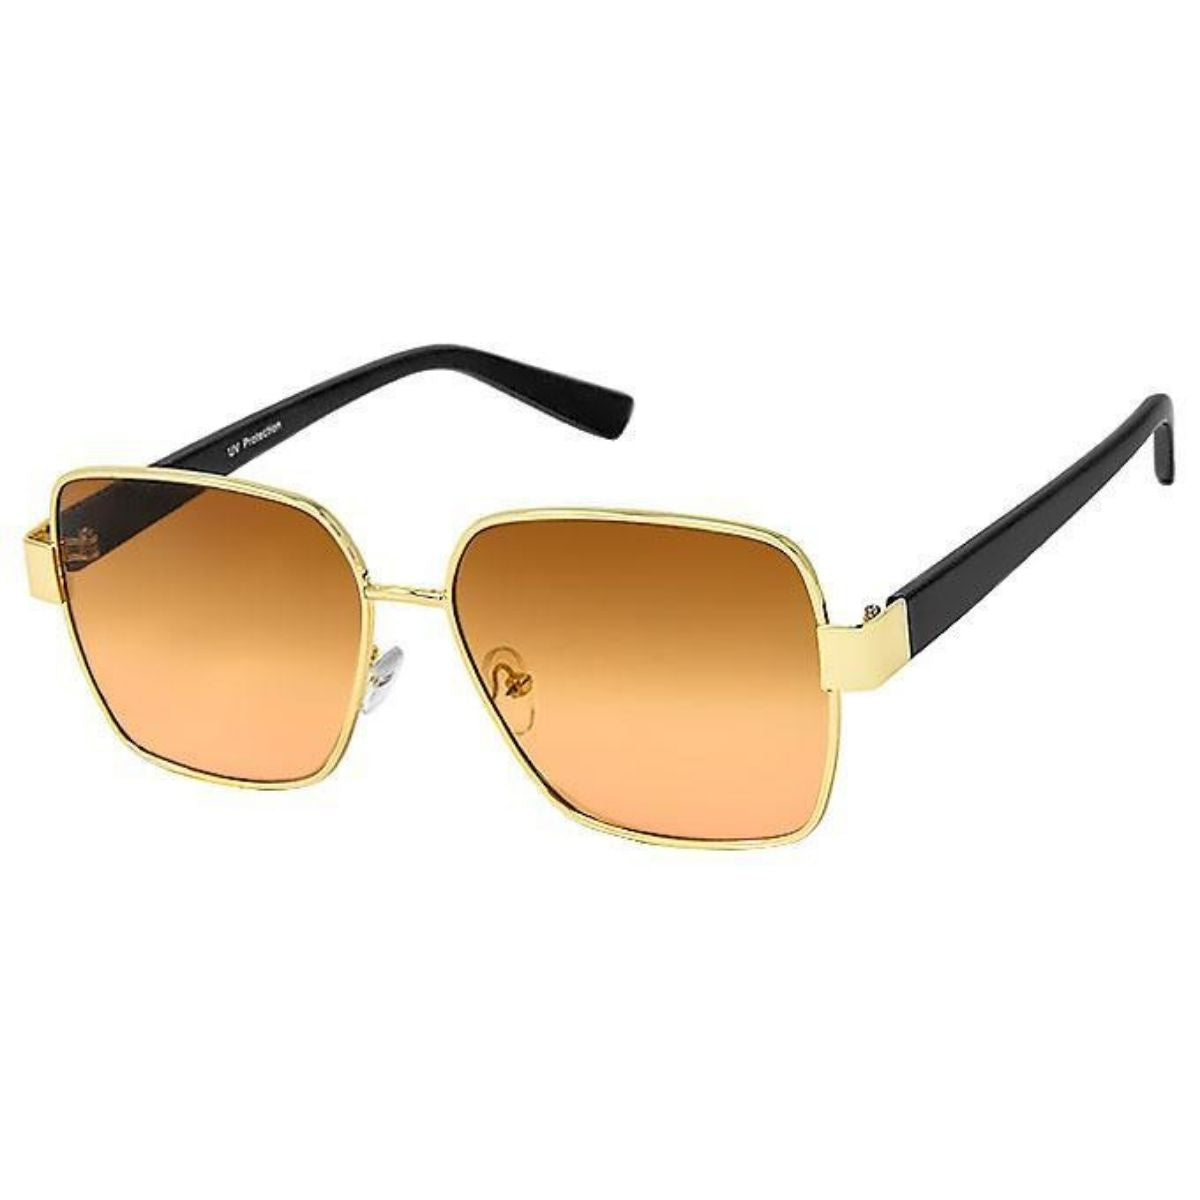 Orange Lens Gold Wire Frame Sunglasses